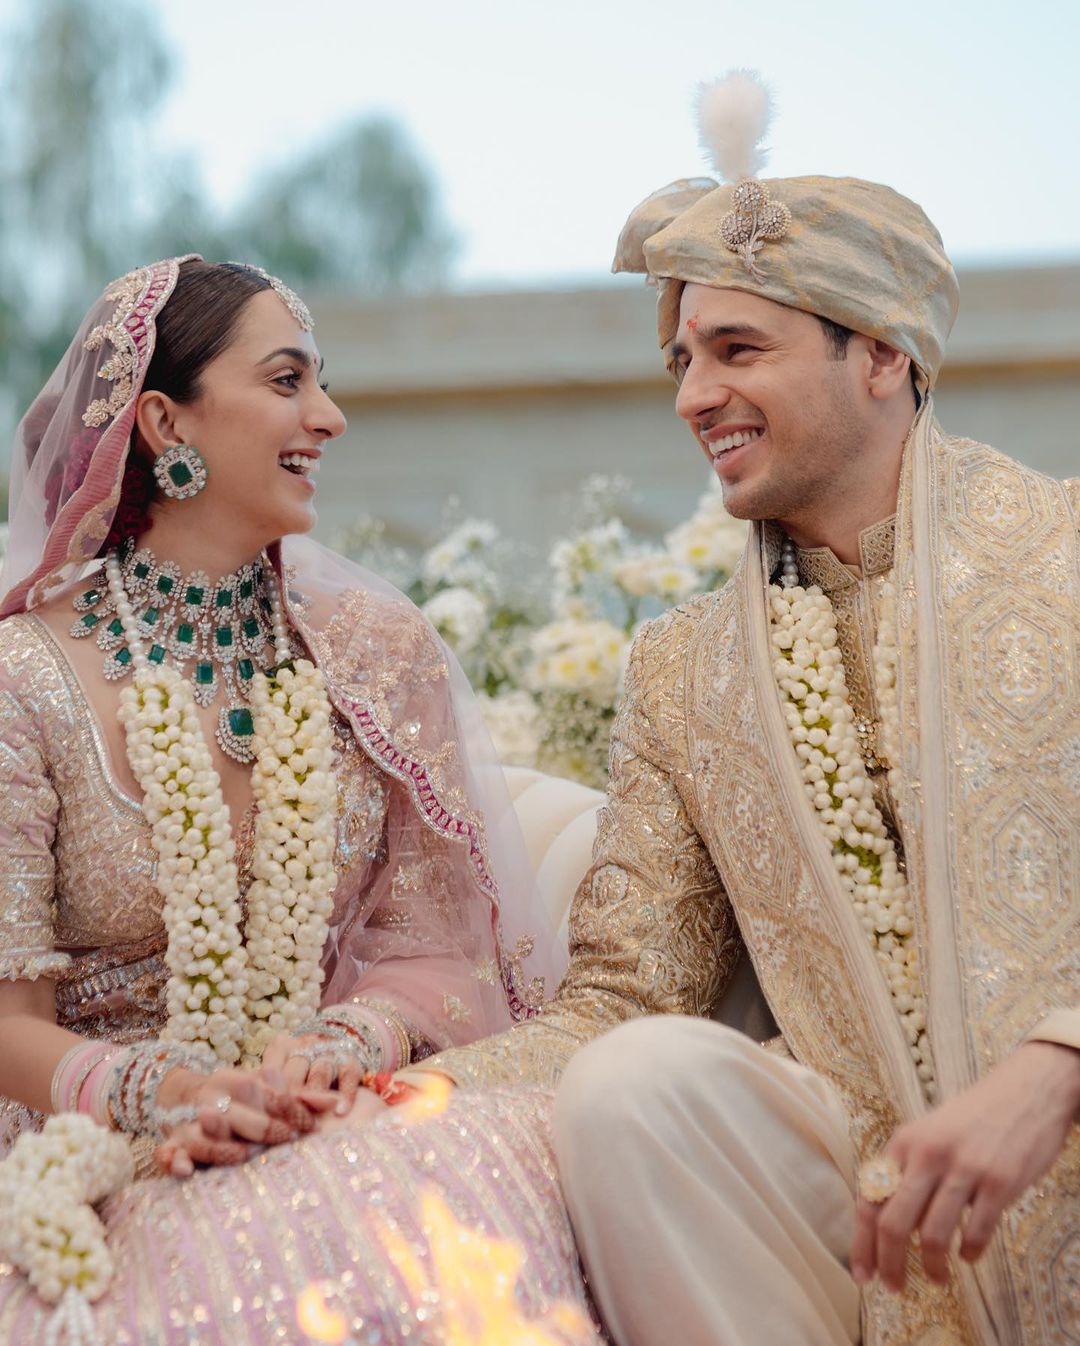 Sidharth Malhotra and Kiara Advani marriage pics gone viral